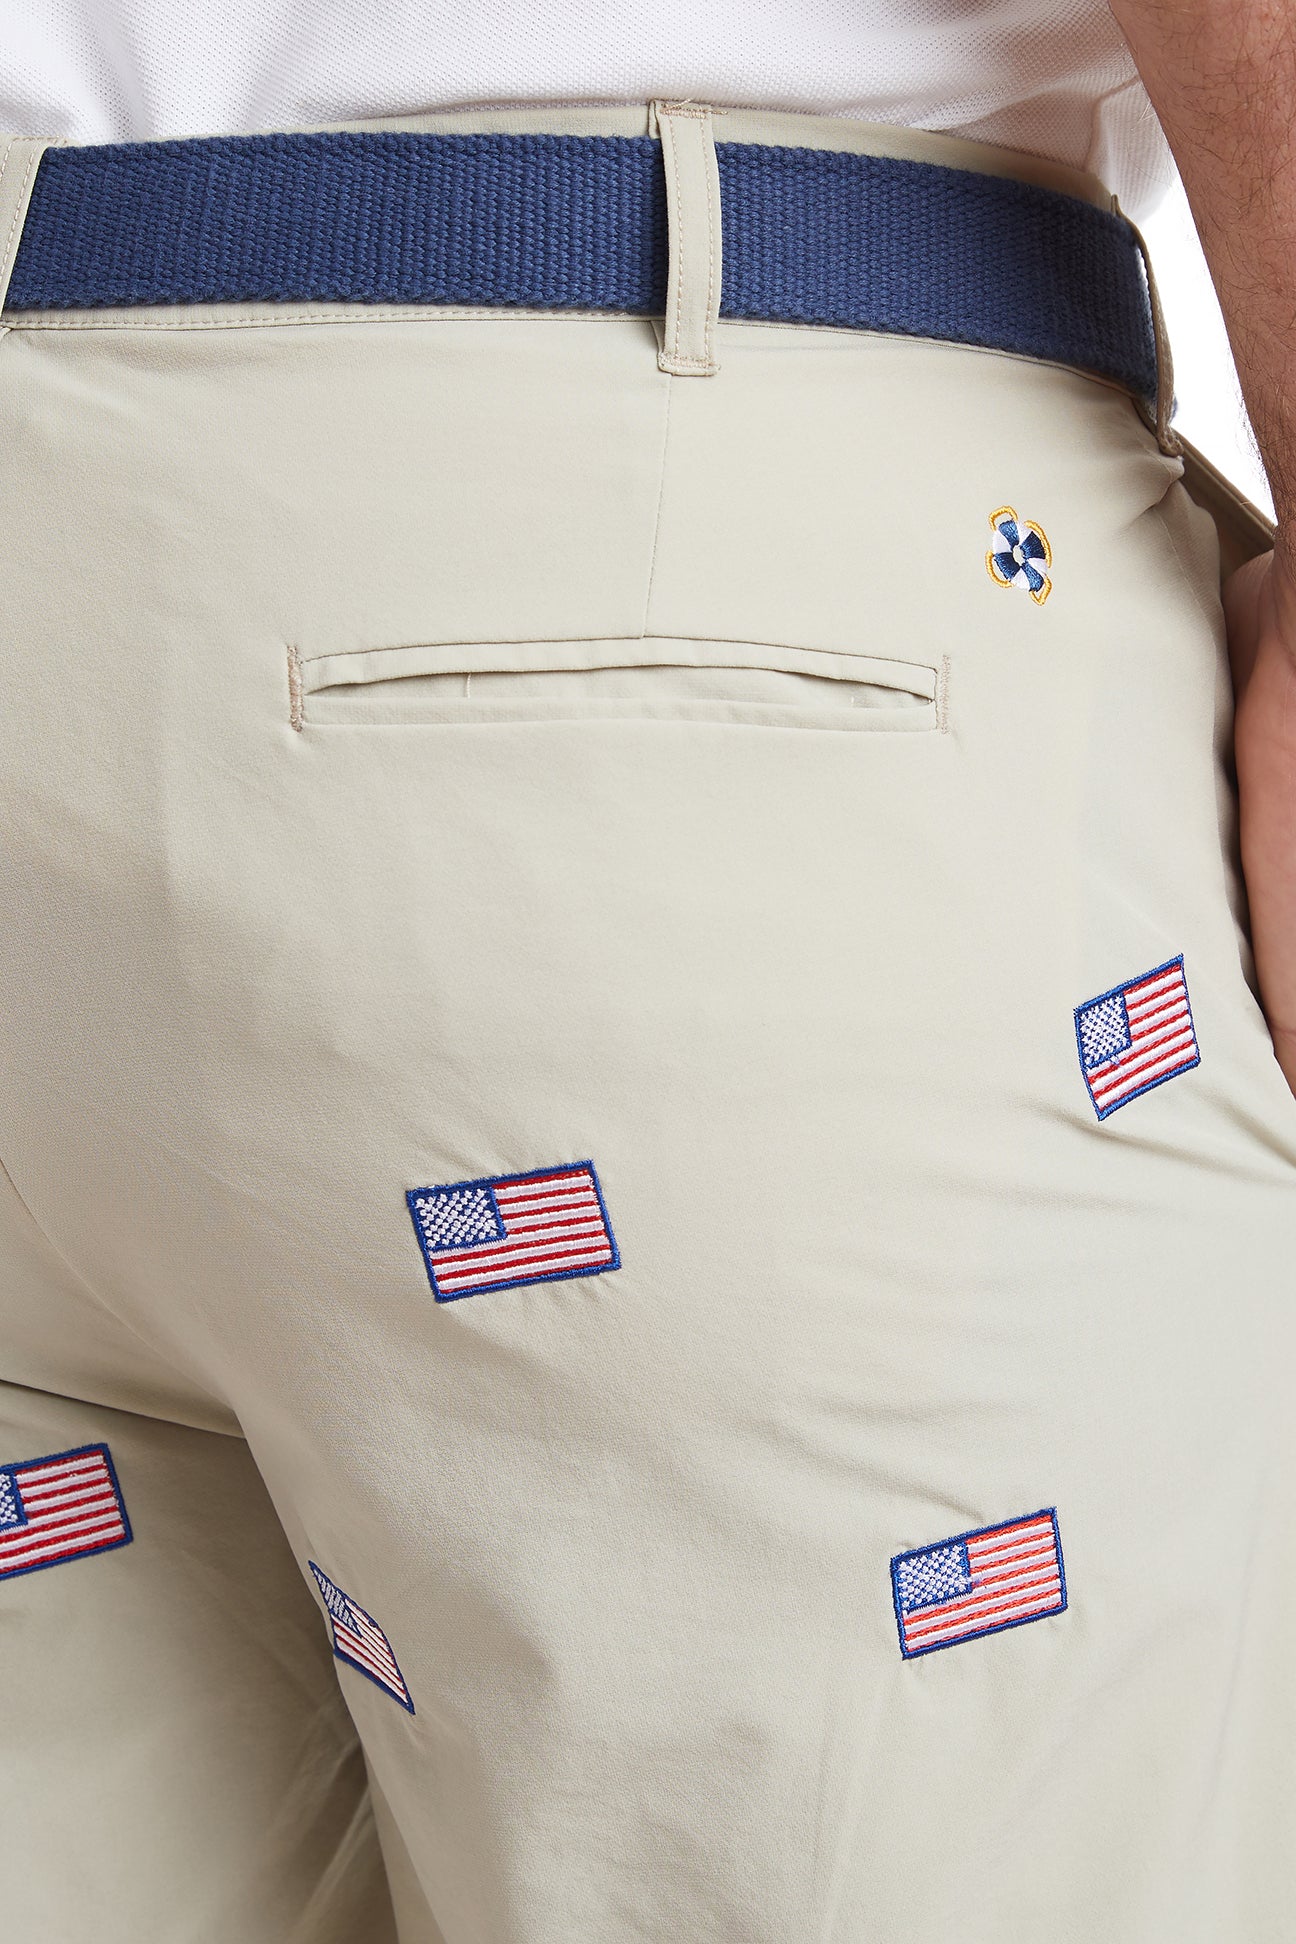 ACKformance Short Khaki with American Flag MENS EMBROIDERED SHORTS Castaway Nantucket Island